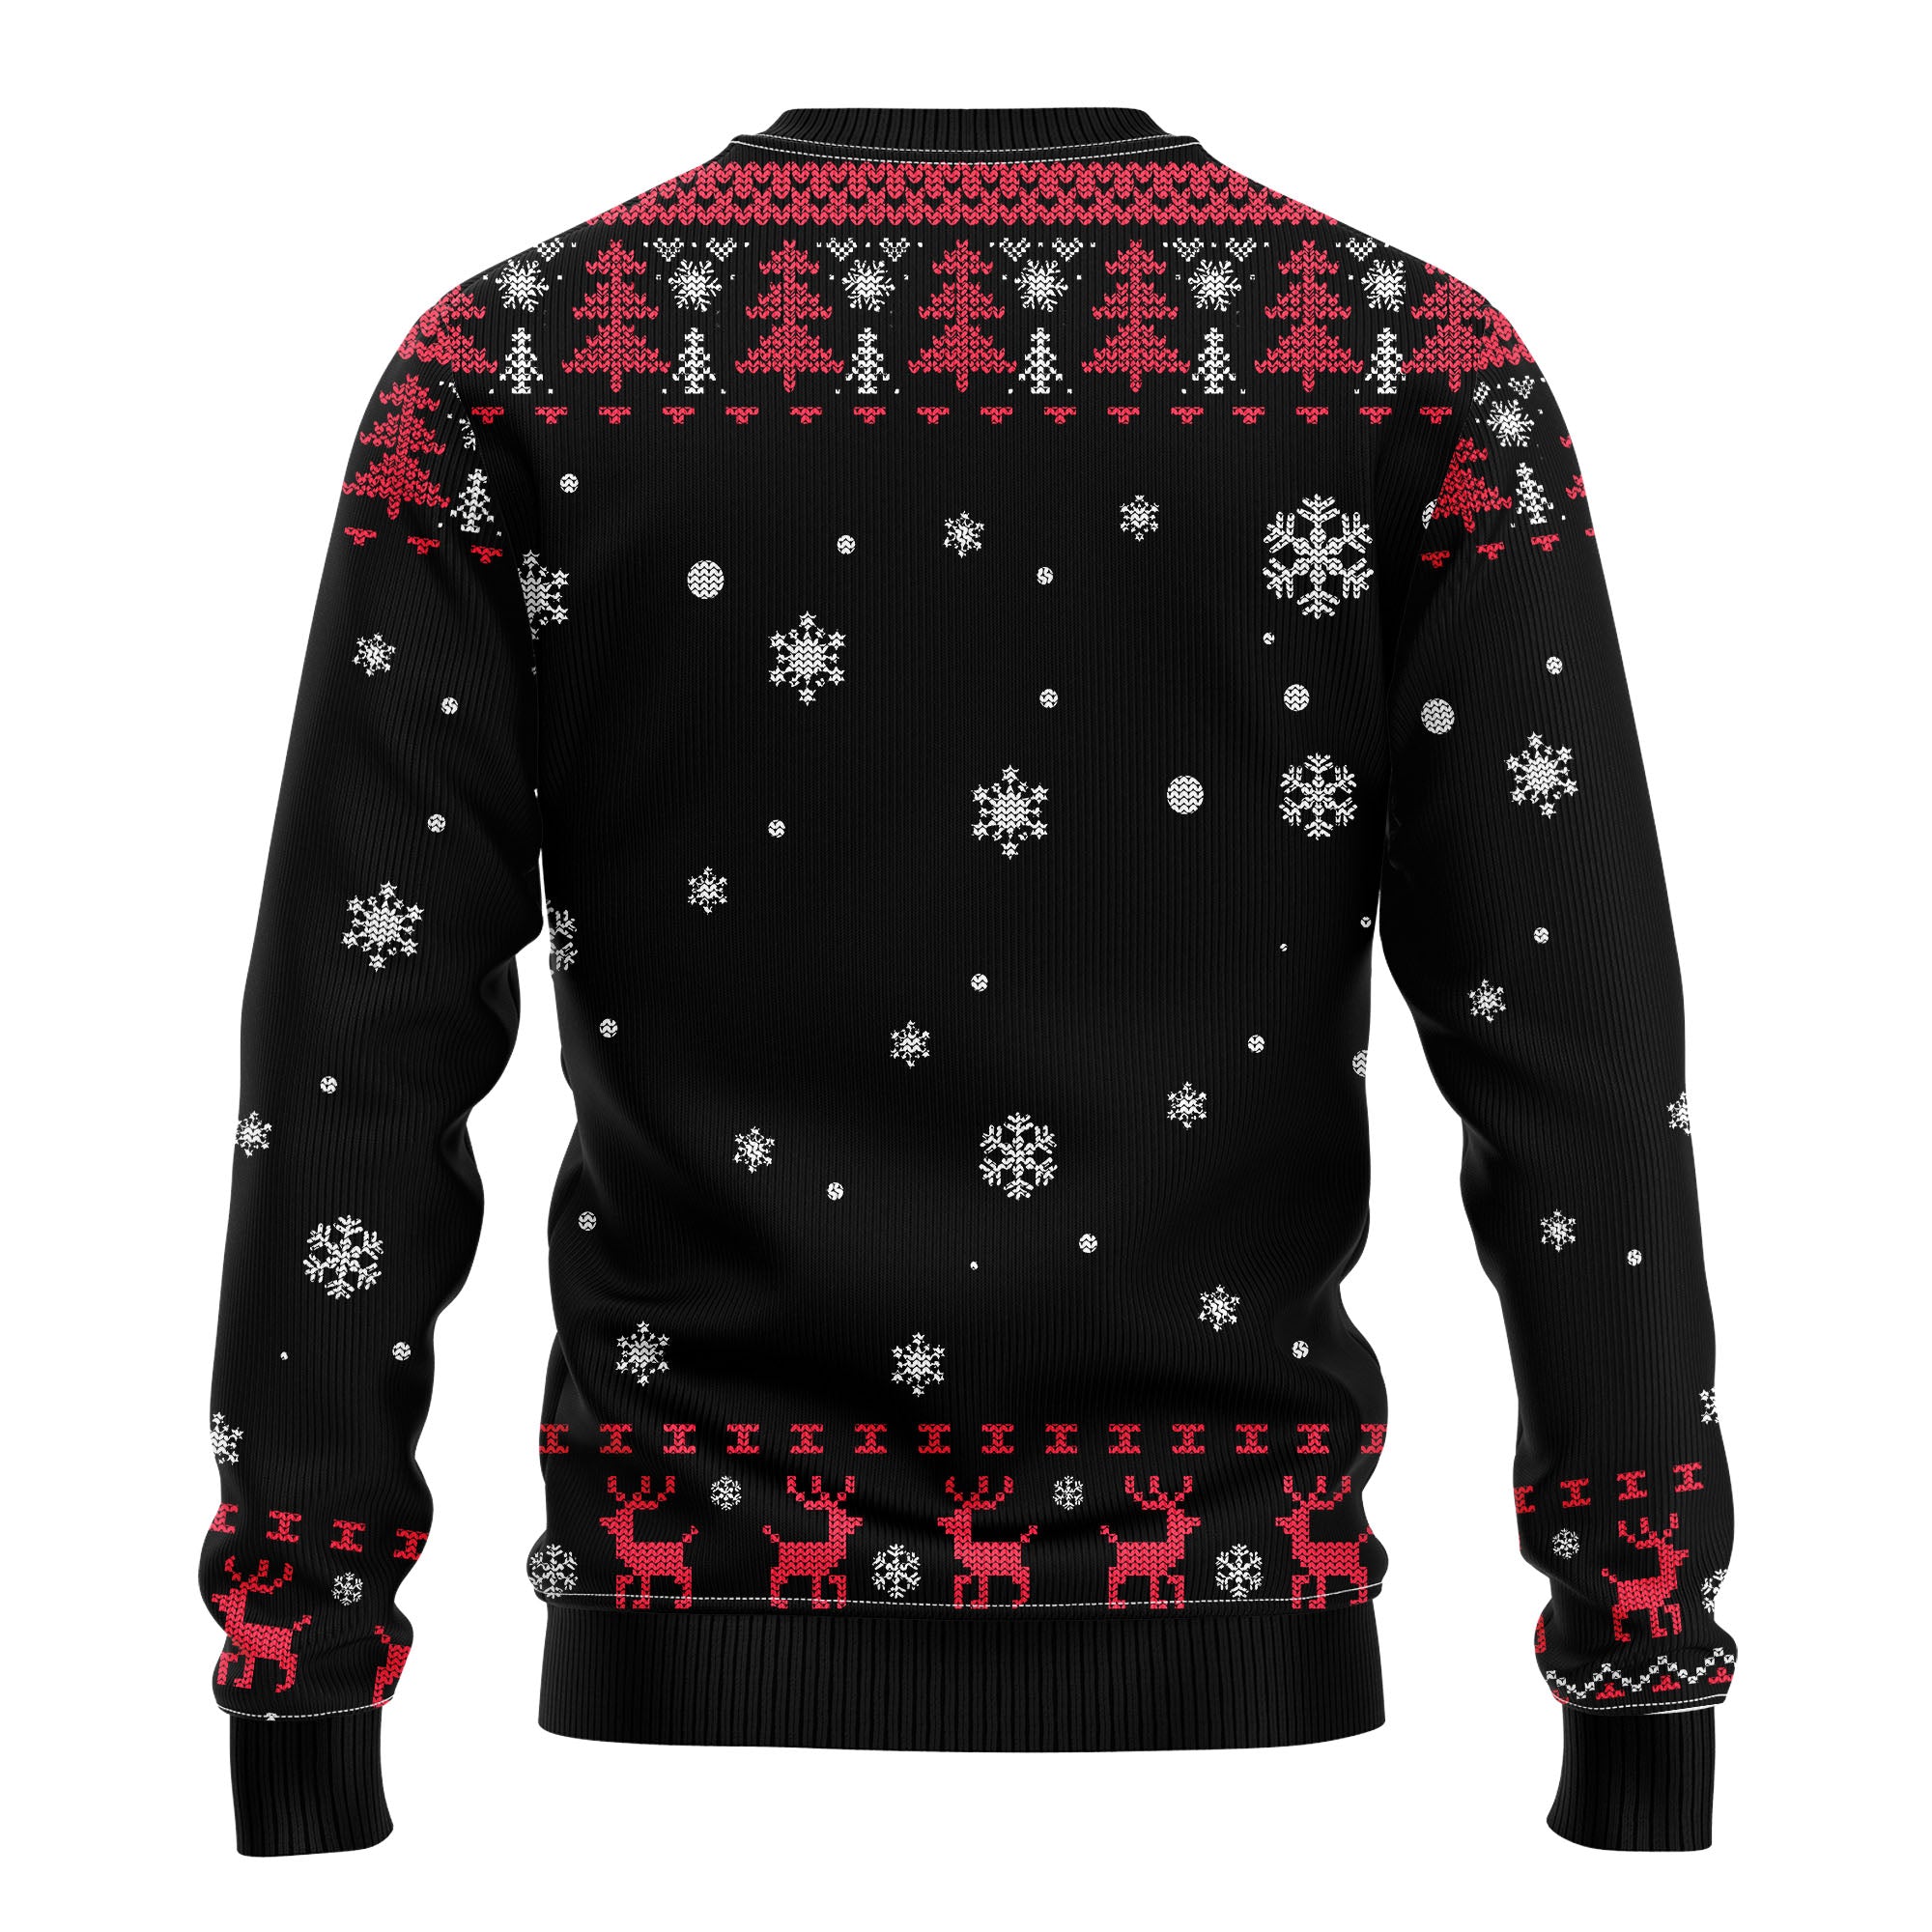 Ghibli Spirited Away Ugly Christmas Sweater Xmas Gift